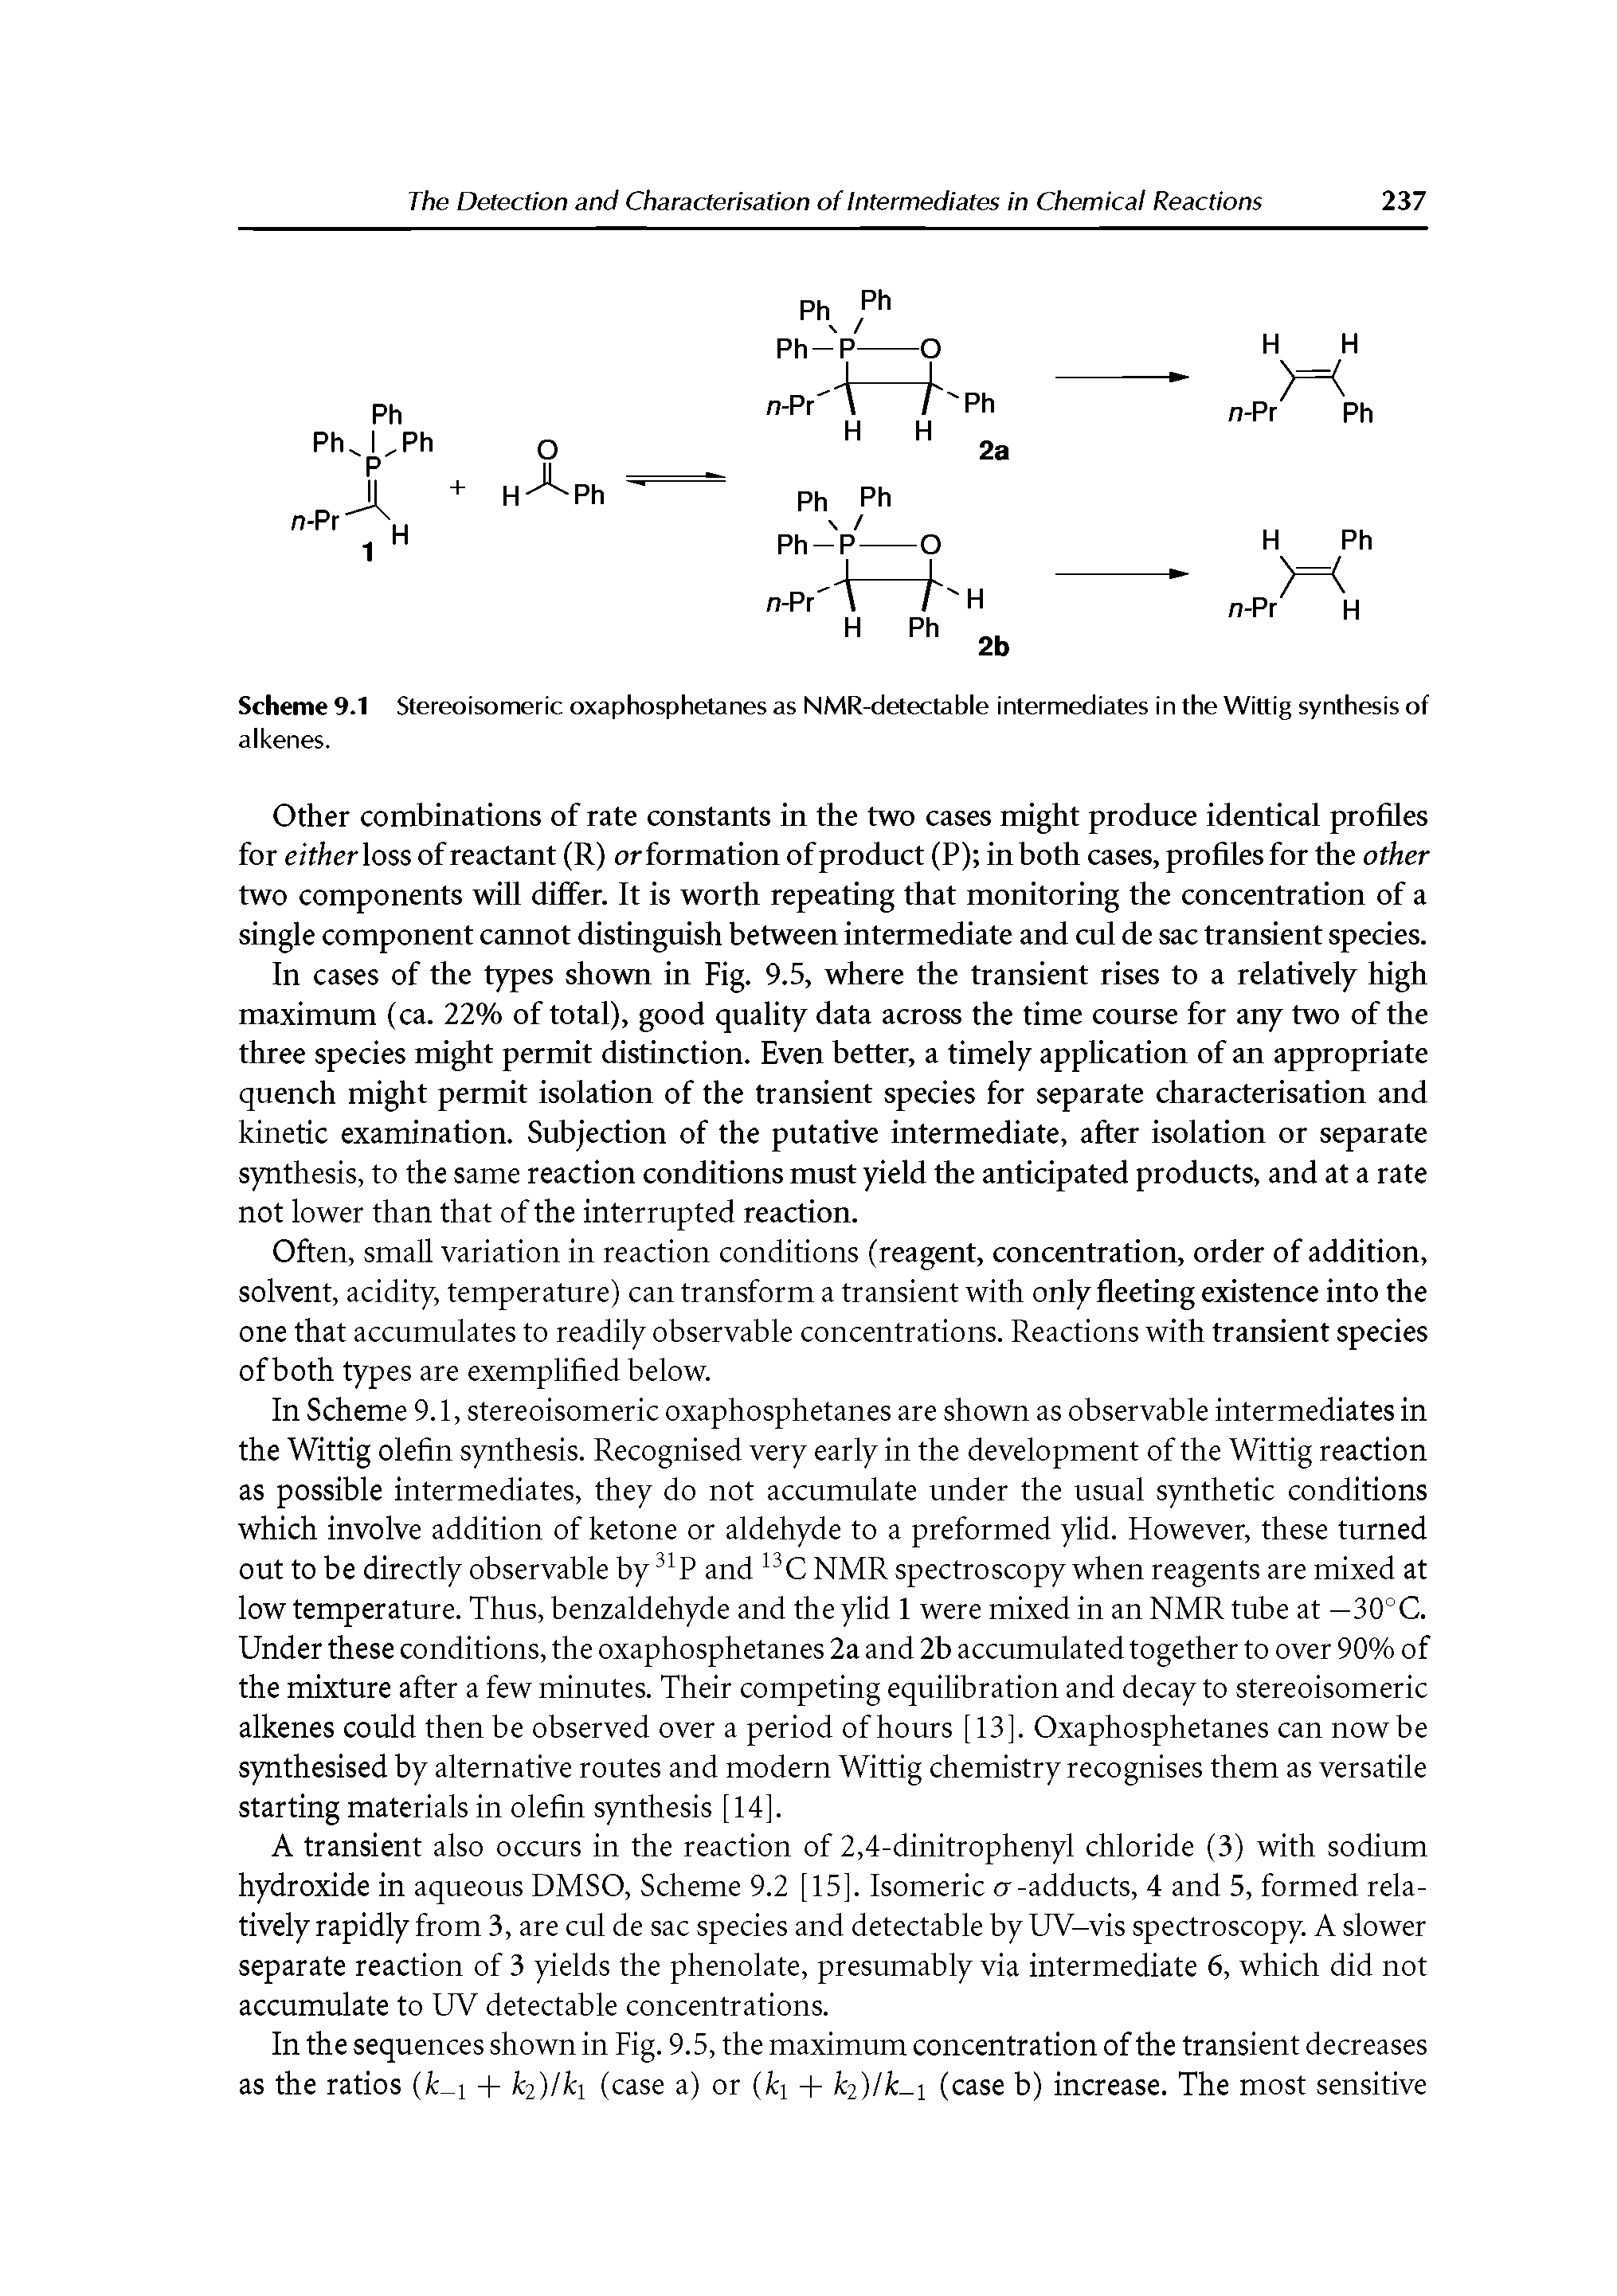 Scheme 9.1 Stereoisomeric oxaphosphetanes as NMR-detectable intermediates in the Wittig synthesis of alkenes.